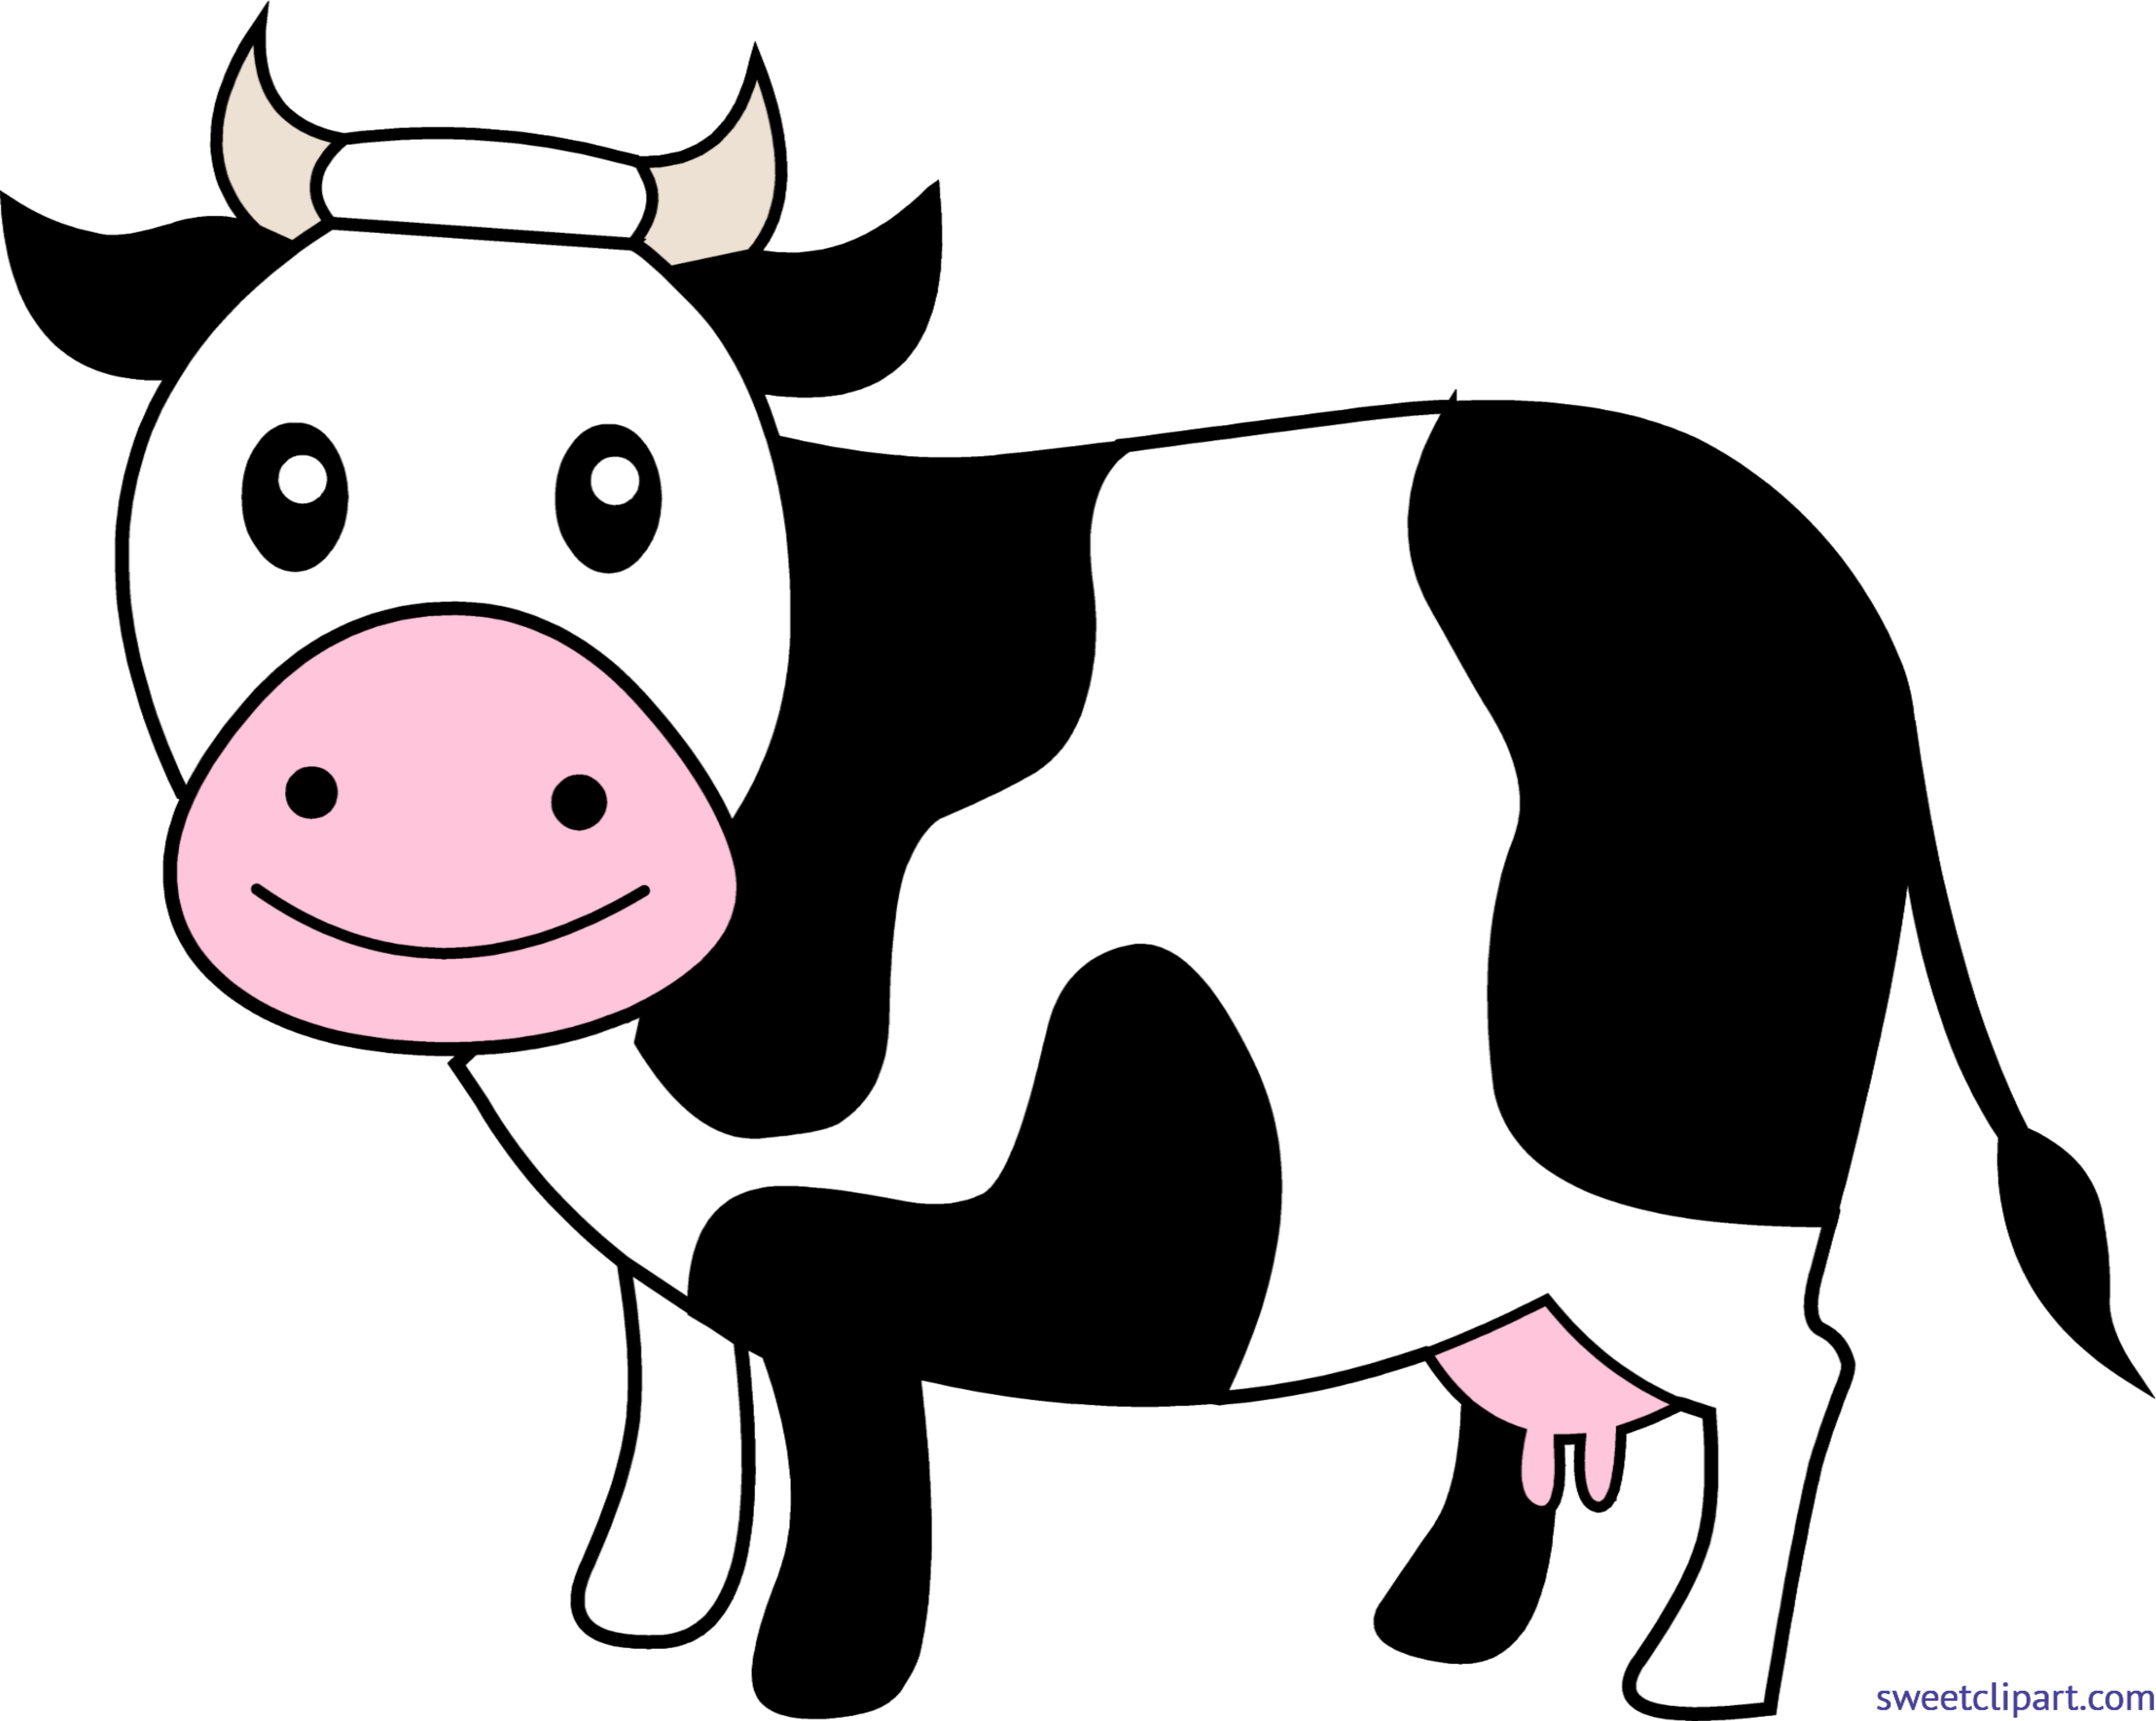 Kawaii clipart cow, Kawaii cow Transparent FREE for download